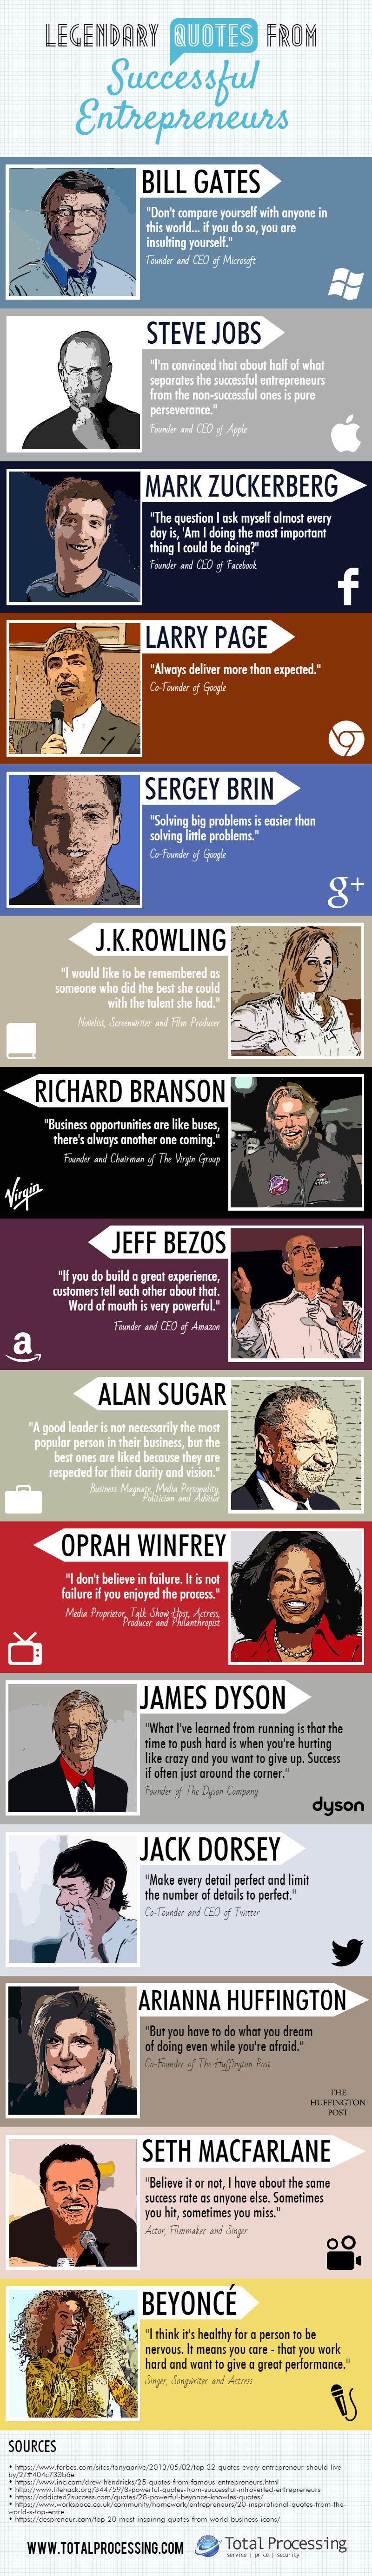 Legendary entrepreneur quotes